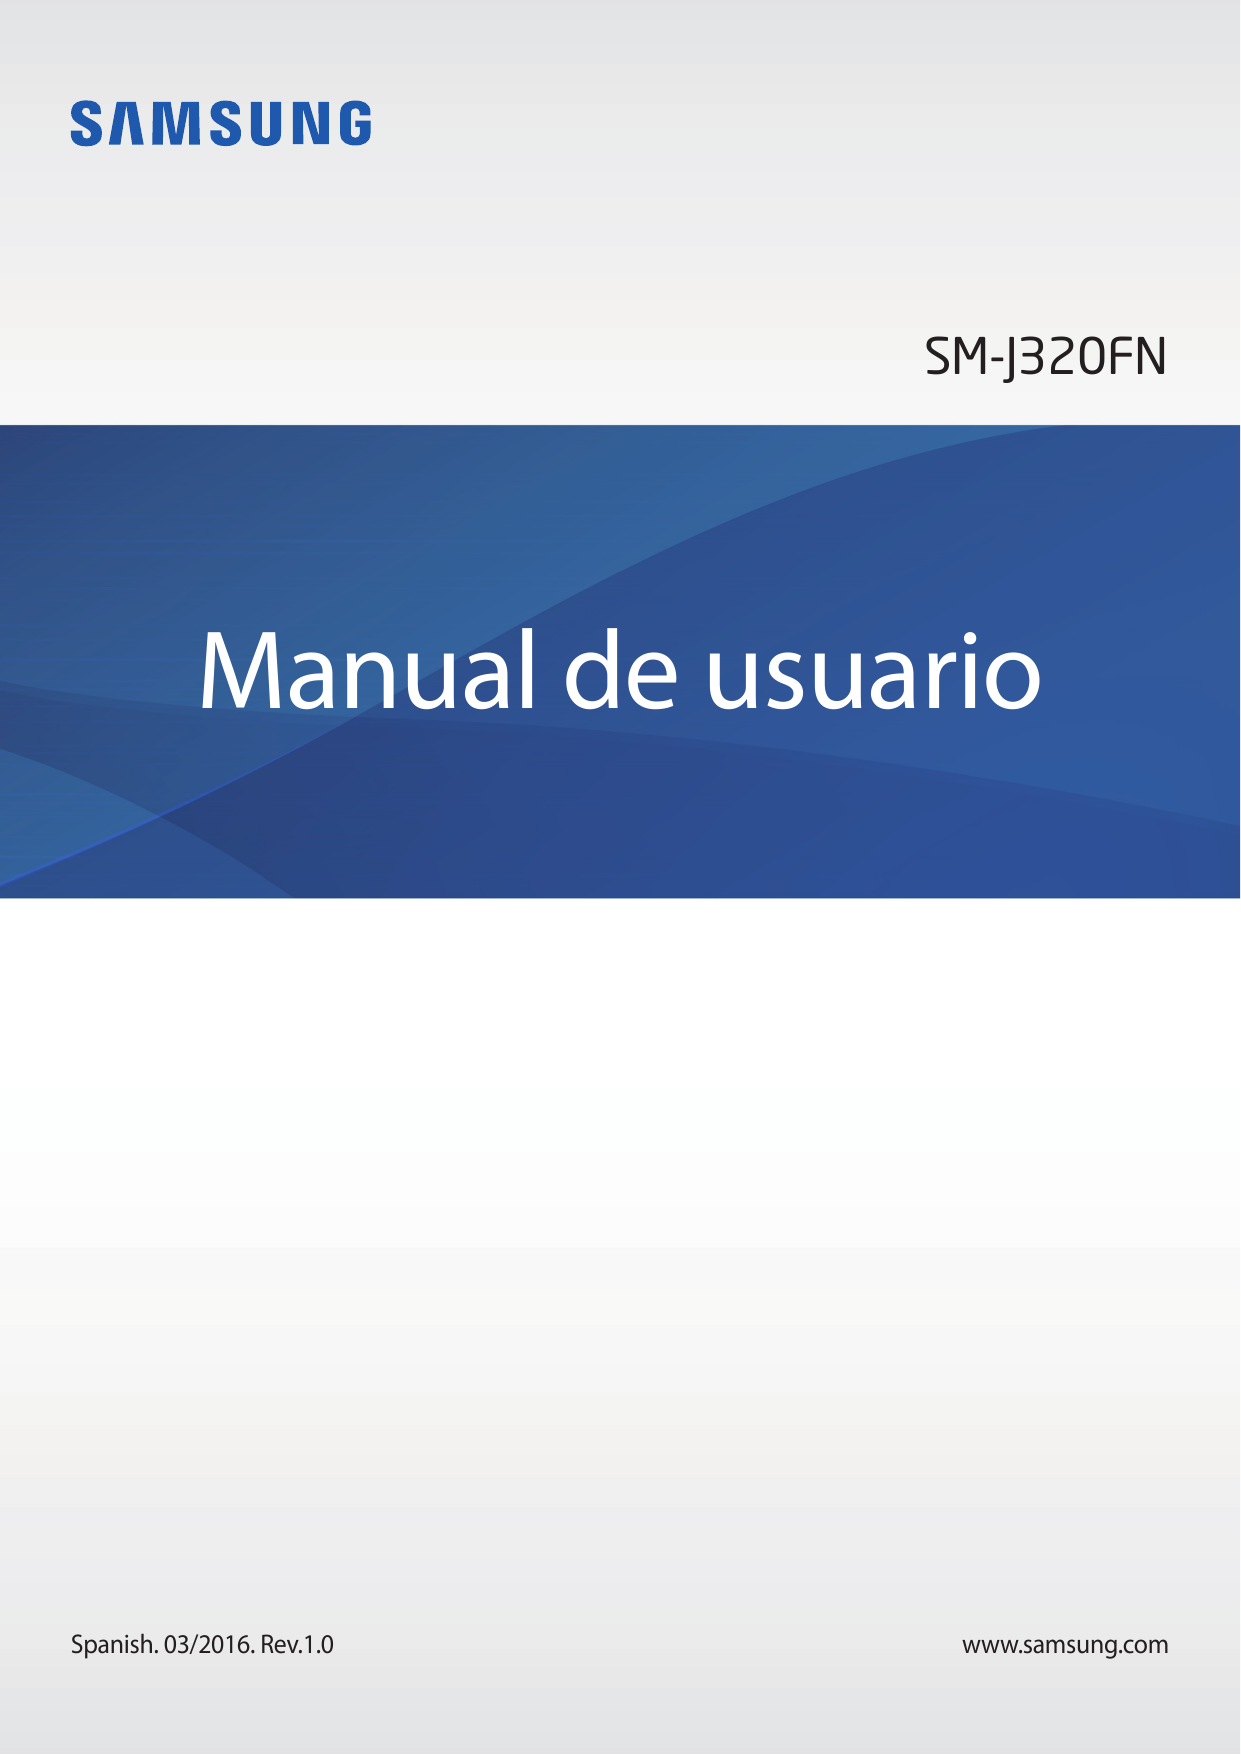 SM-J320FNManual de usuarioSpanish. 03/2016. Rev.1.0www.samsung.com